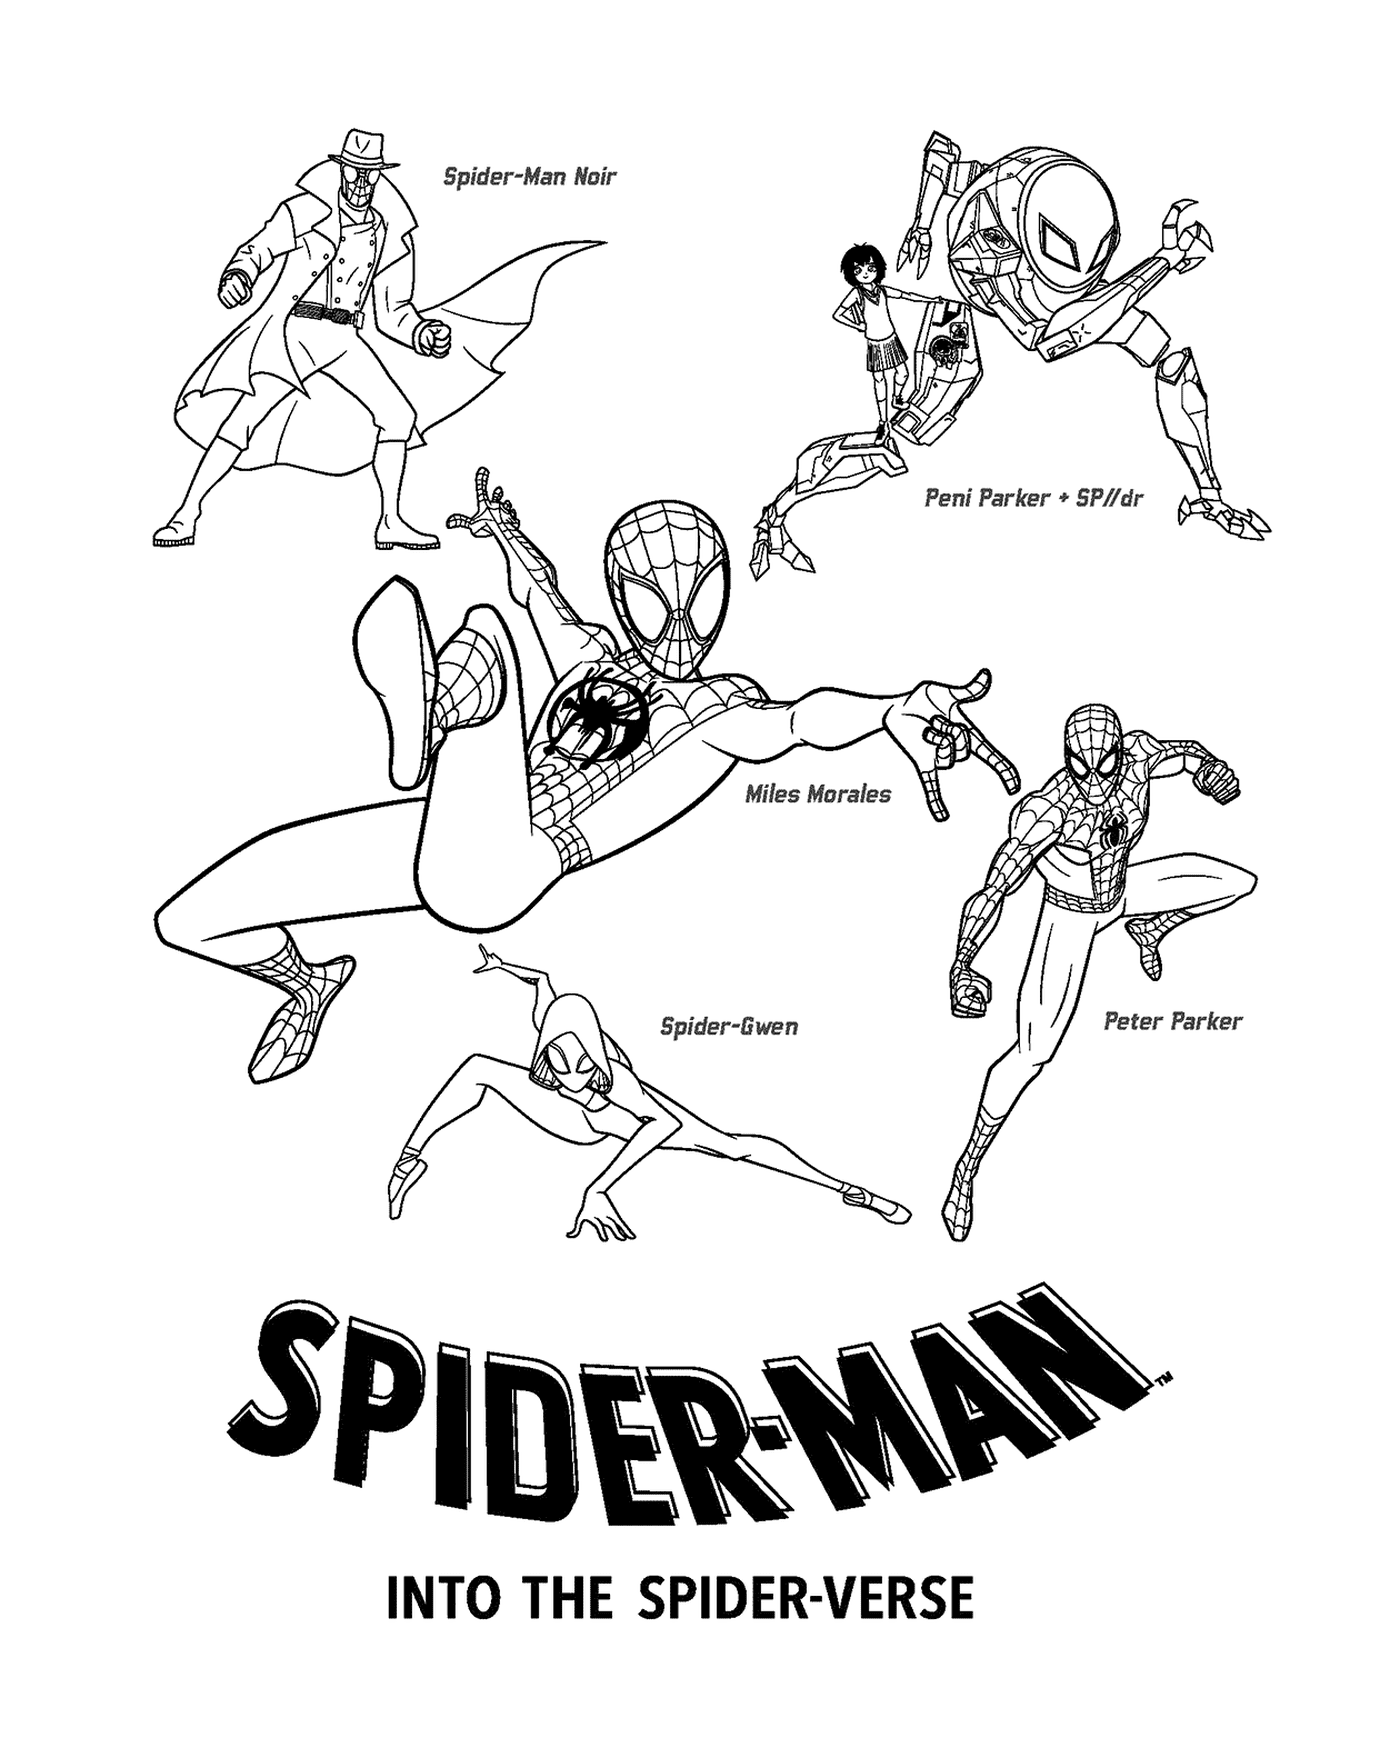   Groupe de Spider-Man 